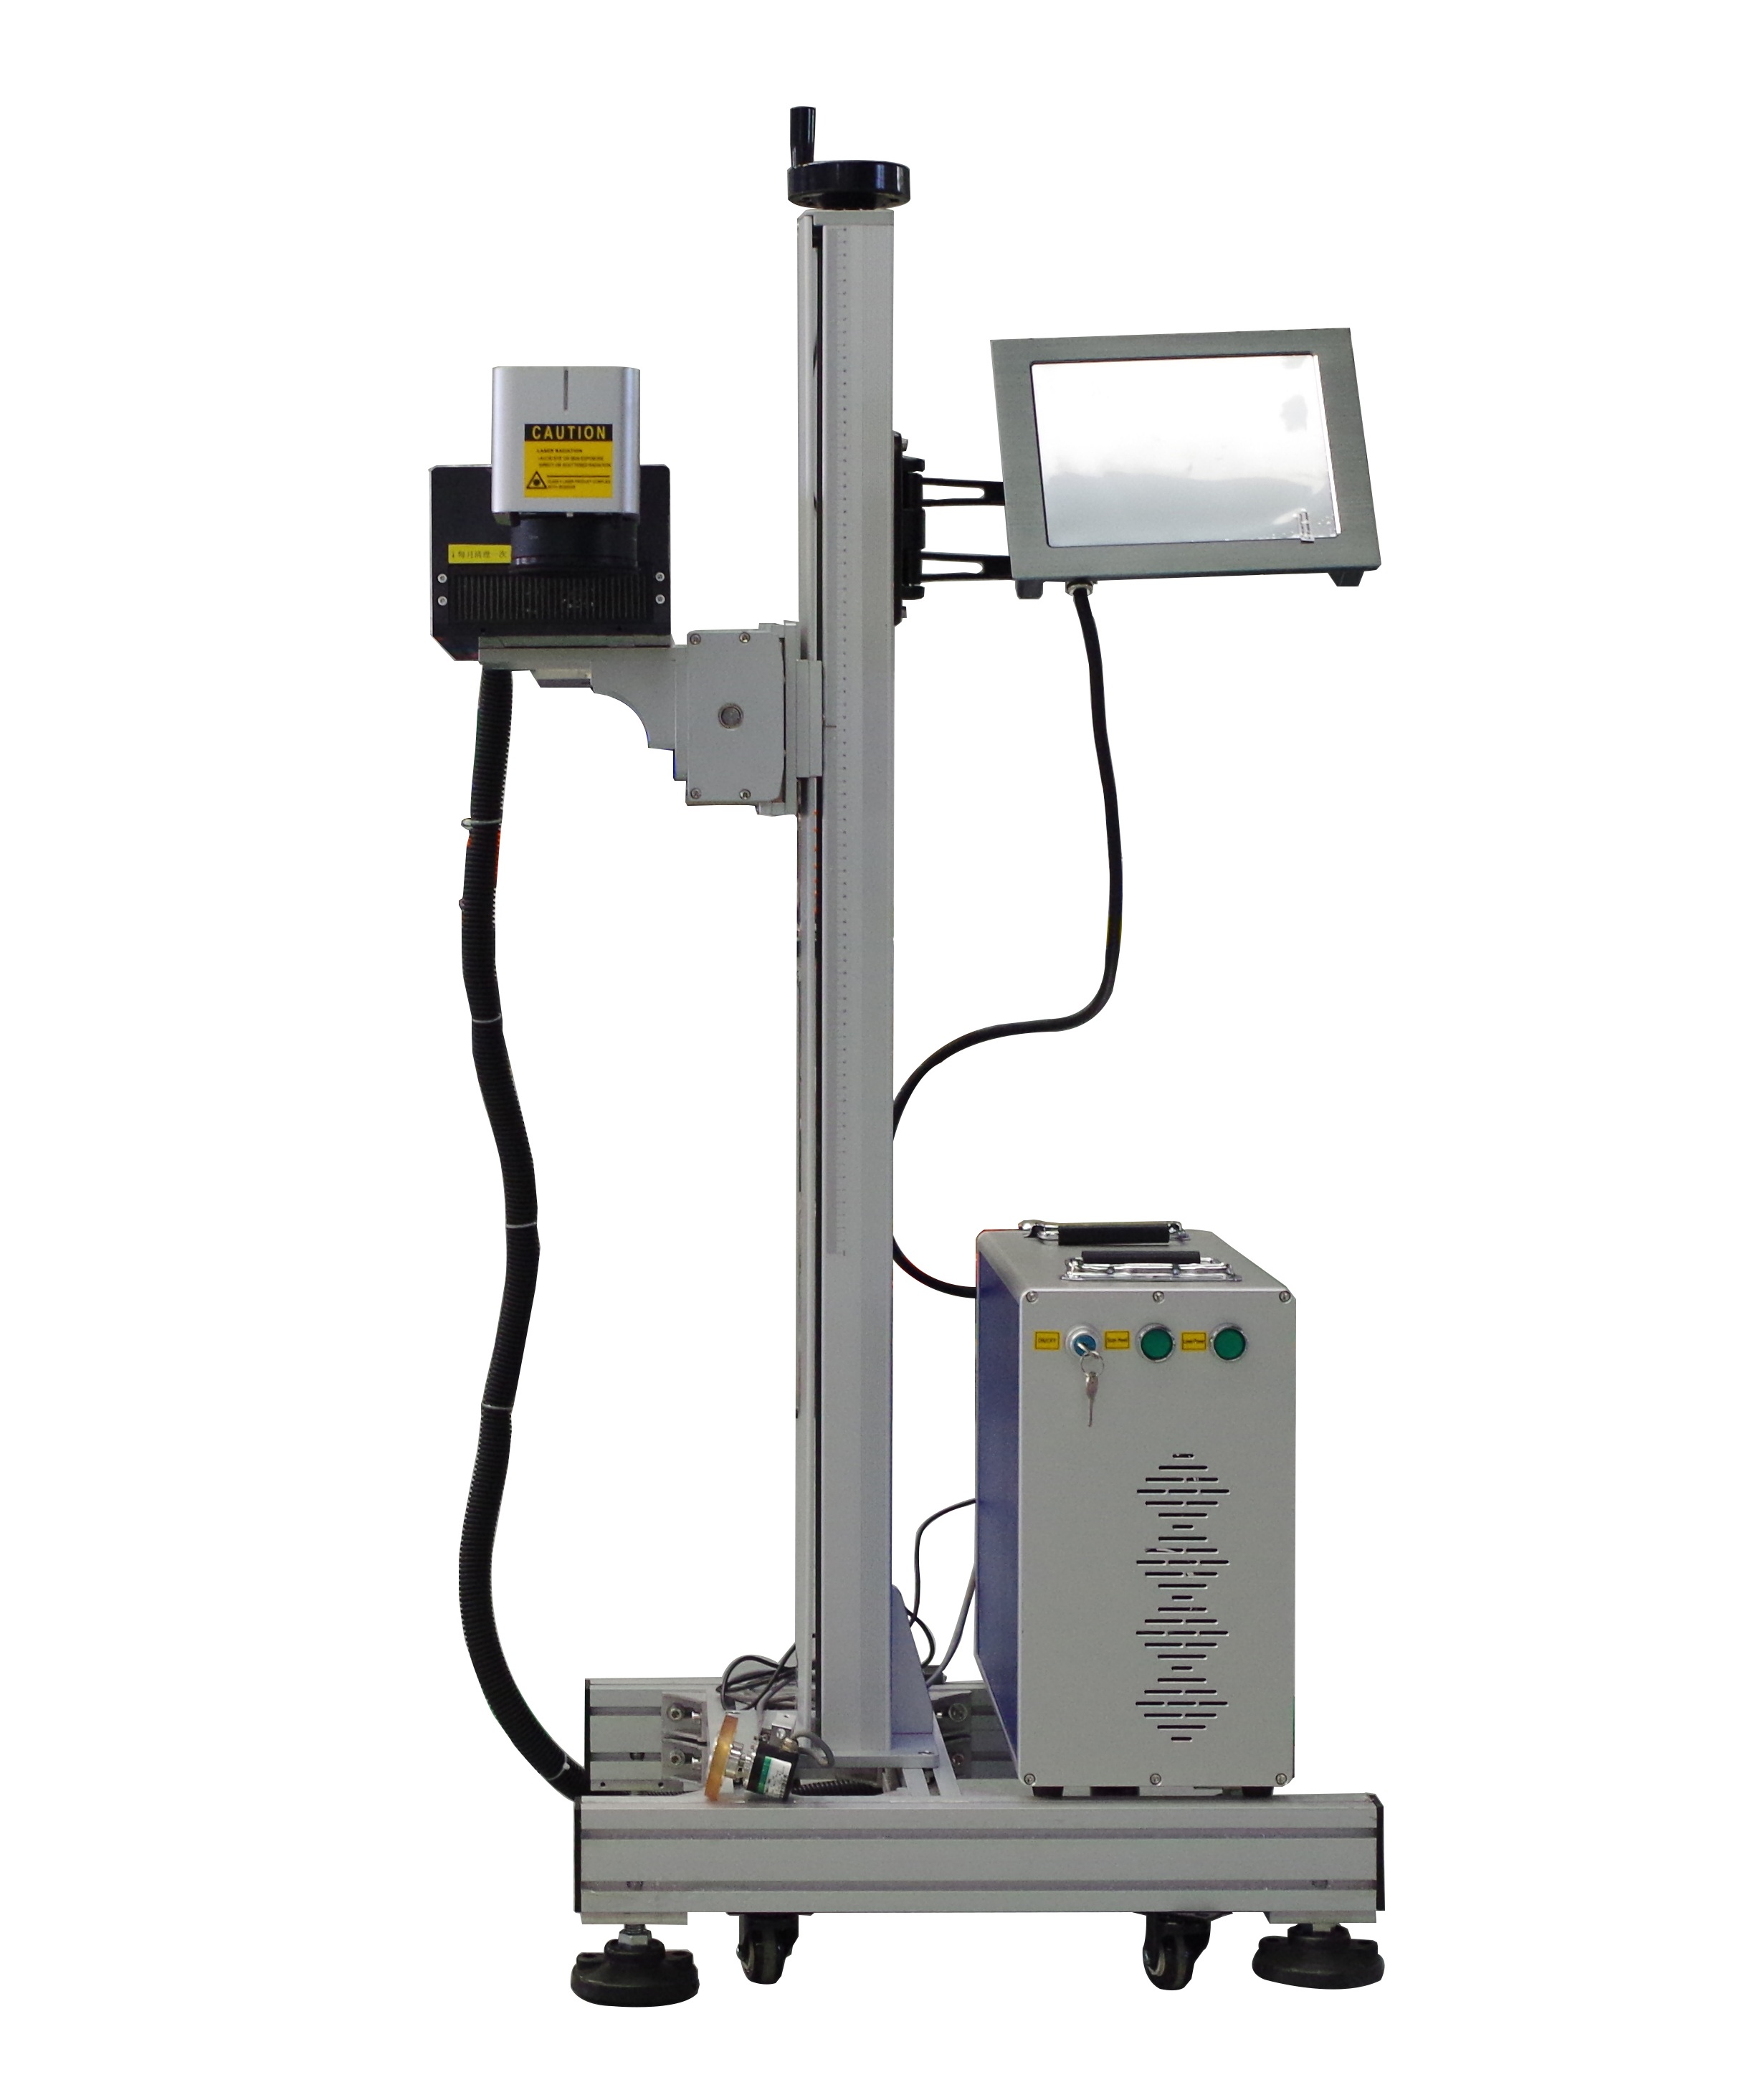 Flying 3W 5W UV Laser Printer Marking Machine สำหรับทำเครื่องหมายบรรจุภัณฑ์อาหาร PET PP, Qr Code Bar Code Laser Marker